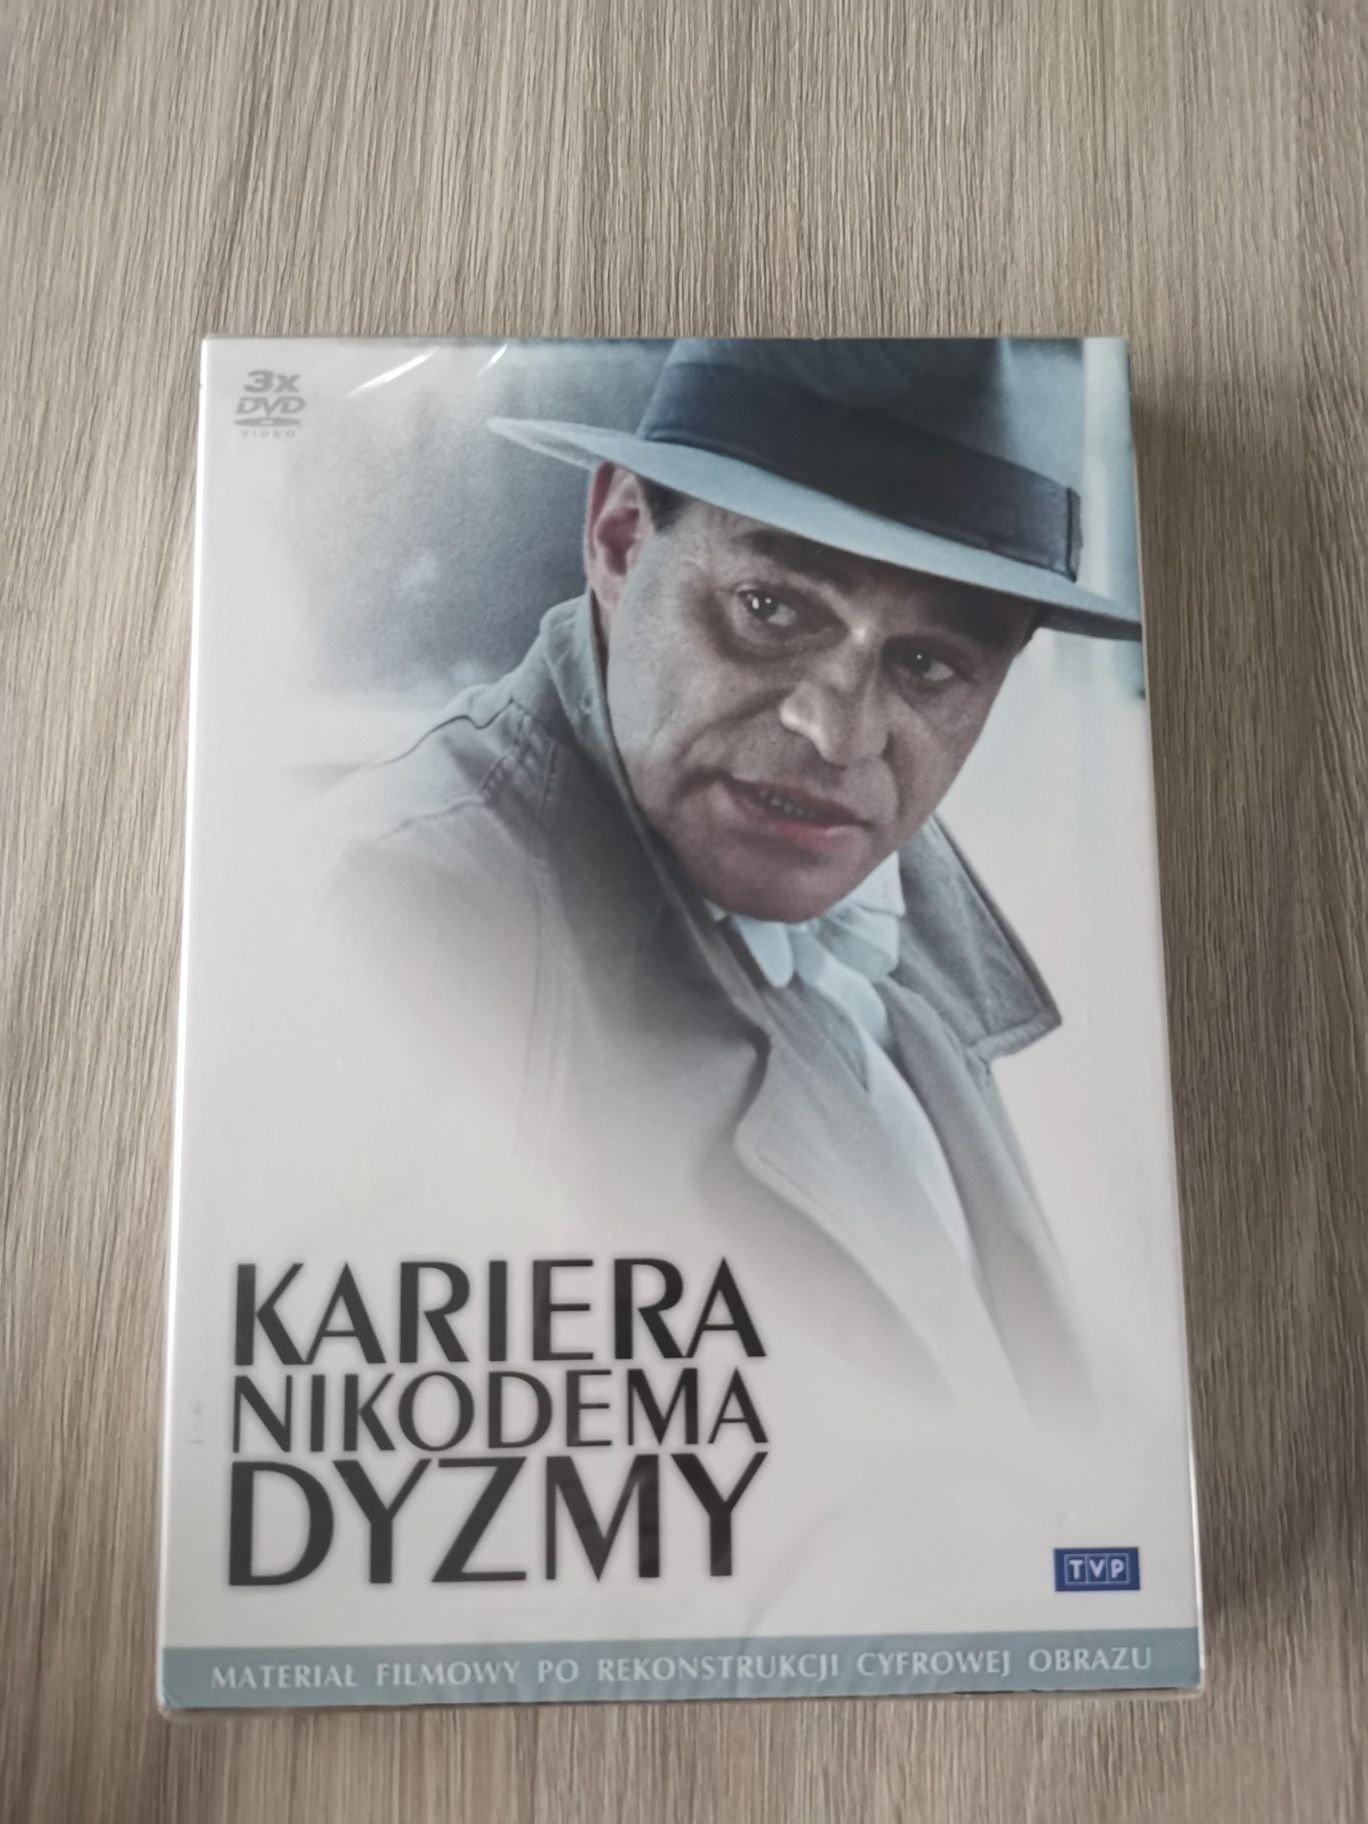 Film Dvd Kariera Nikodema Dyzmy